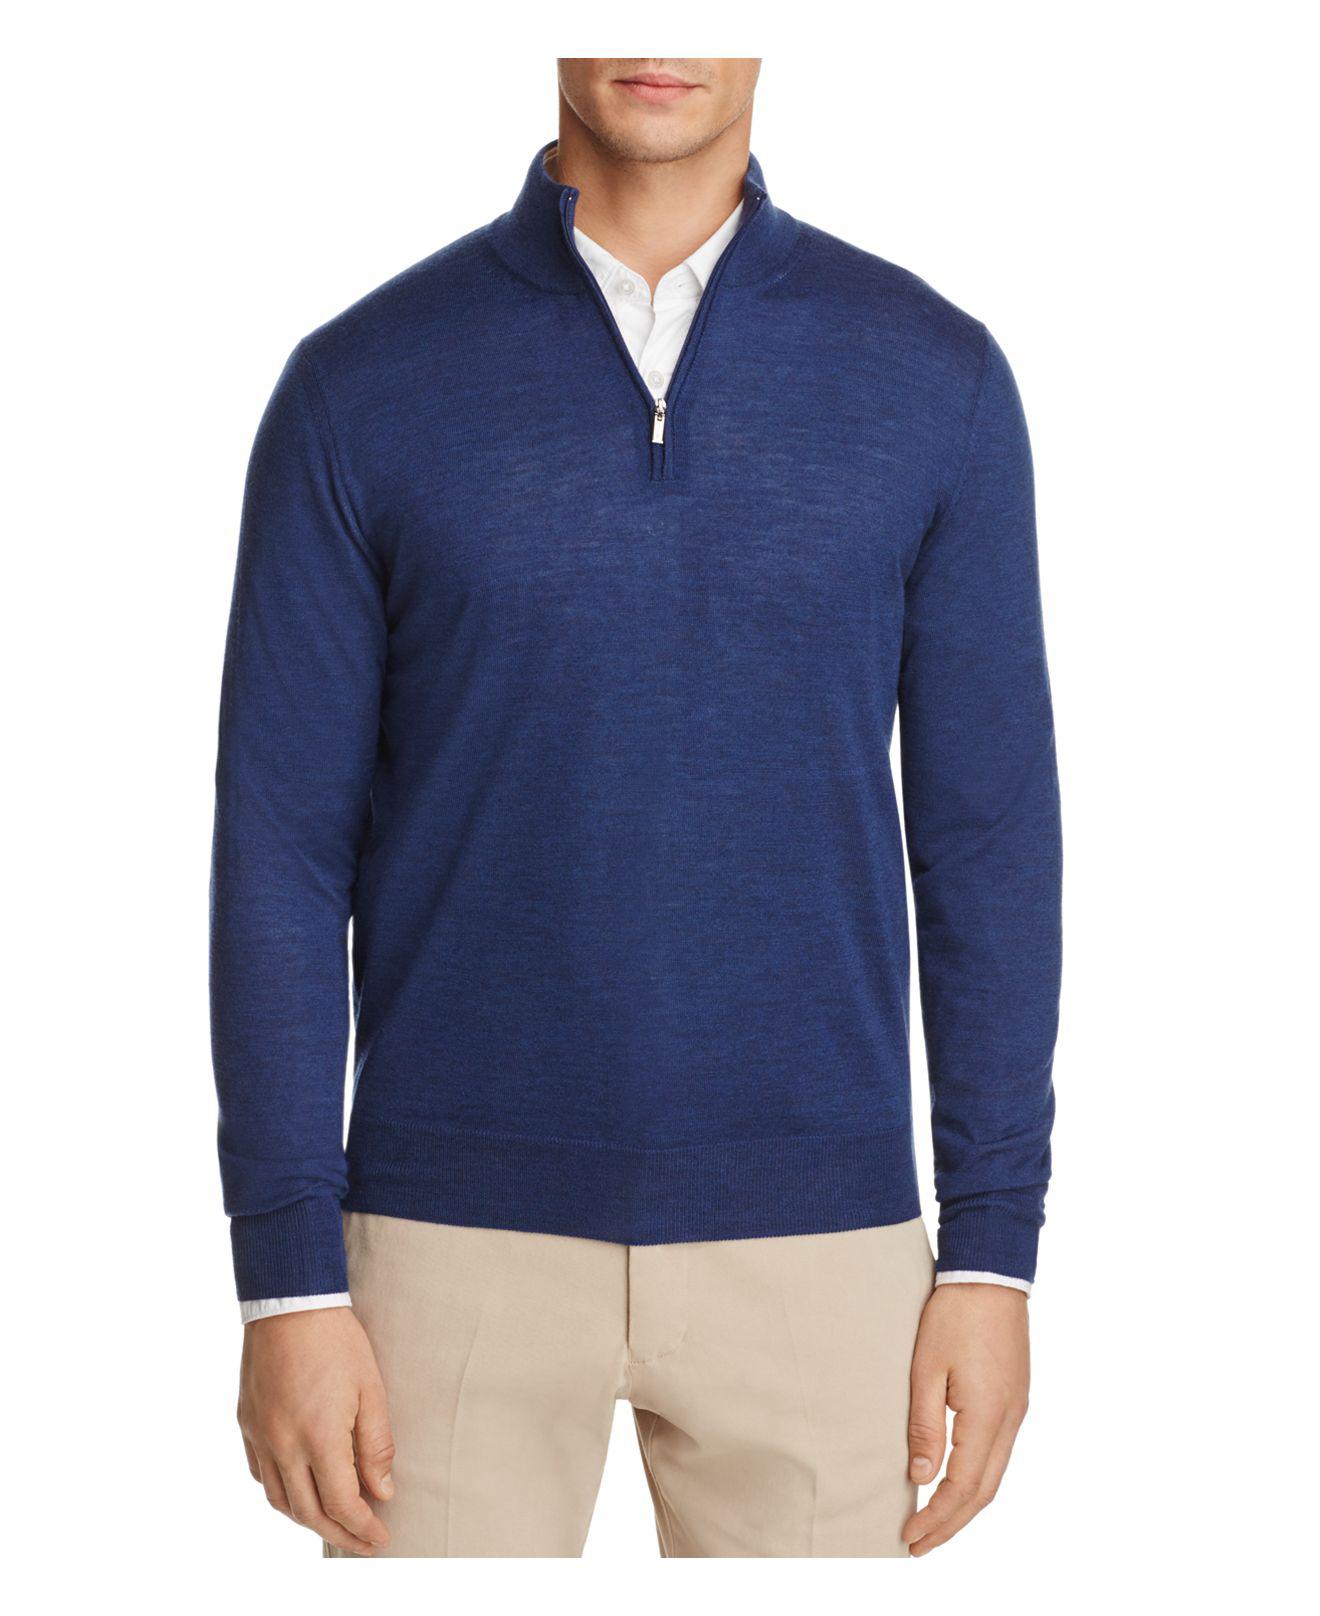 Canali Quarter Zip Regular Fit Knit Sweater in Blue for Men - Lyst